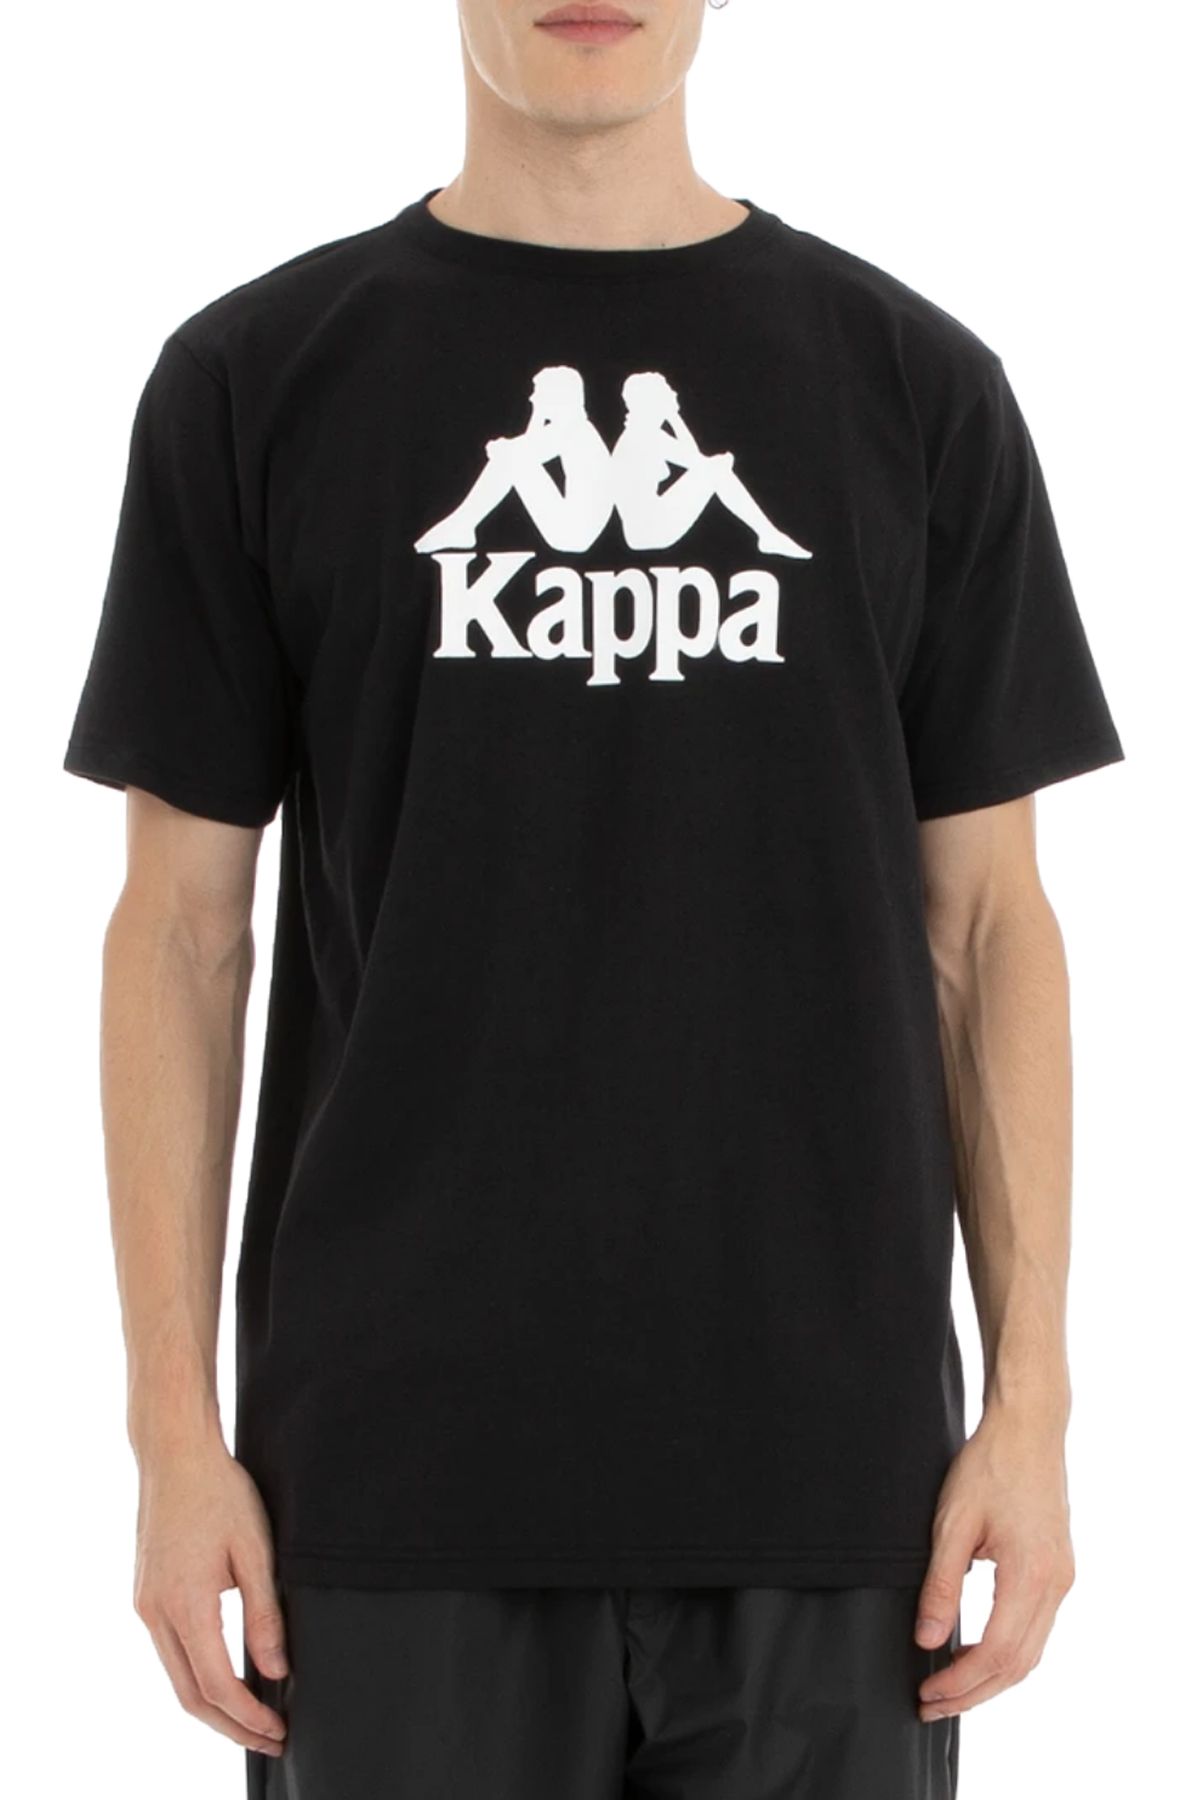 KAPPA Authentic Estessi T-Shirt 304KPT0-A13 - Shiekh